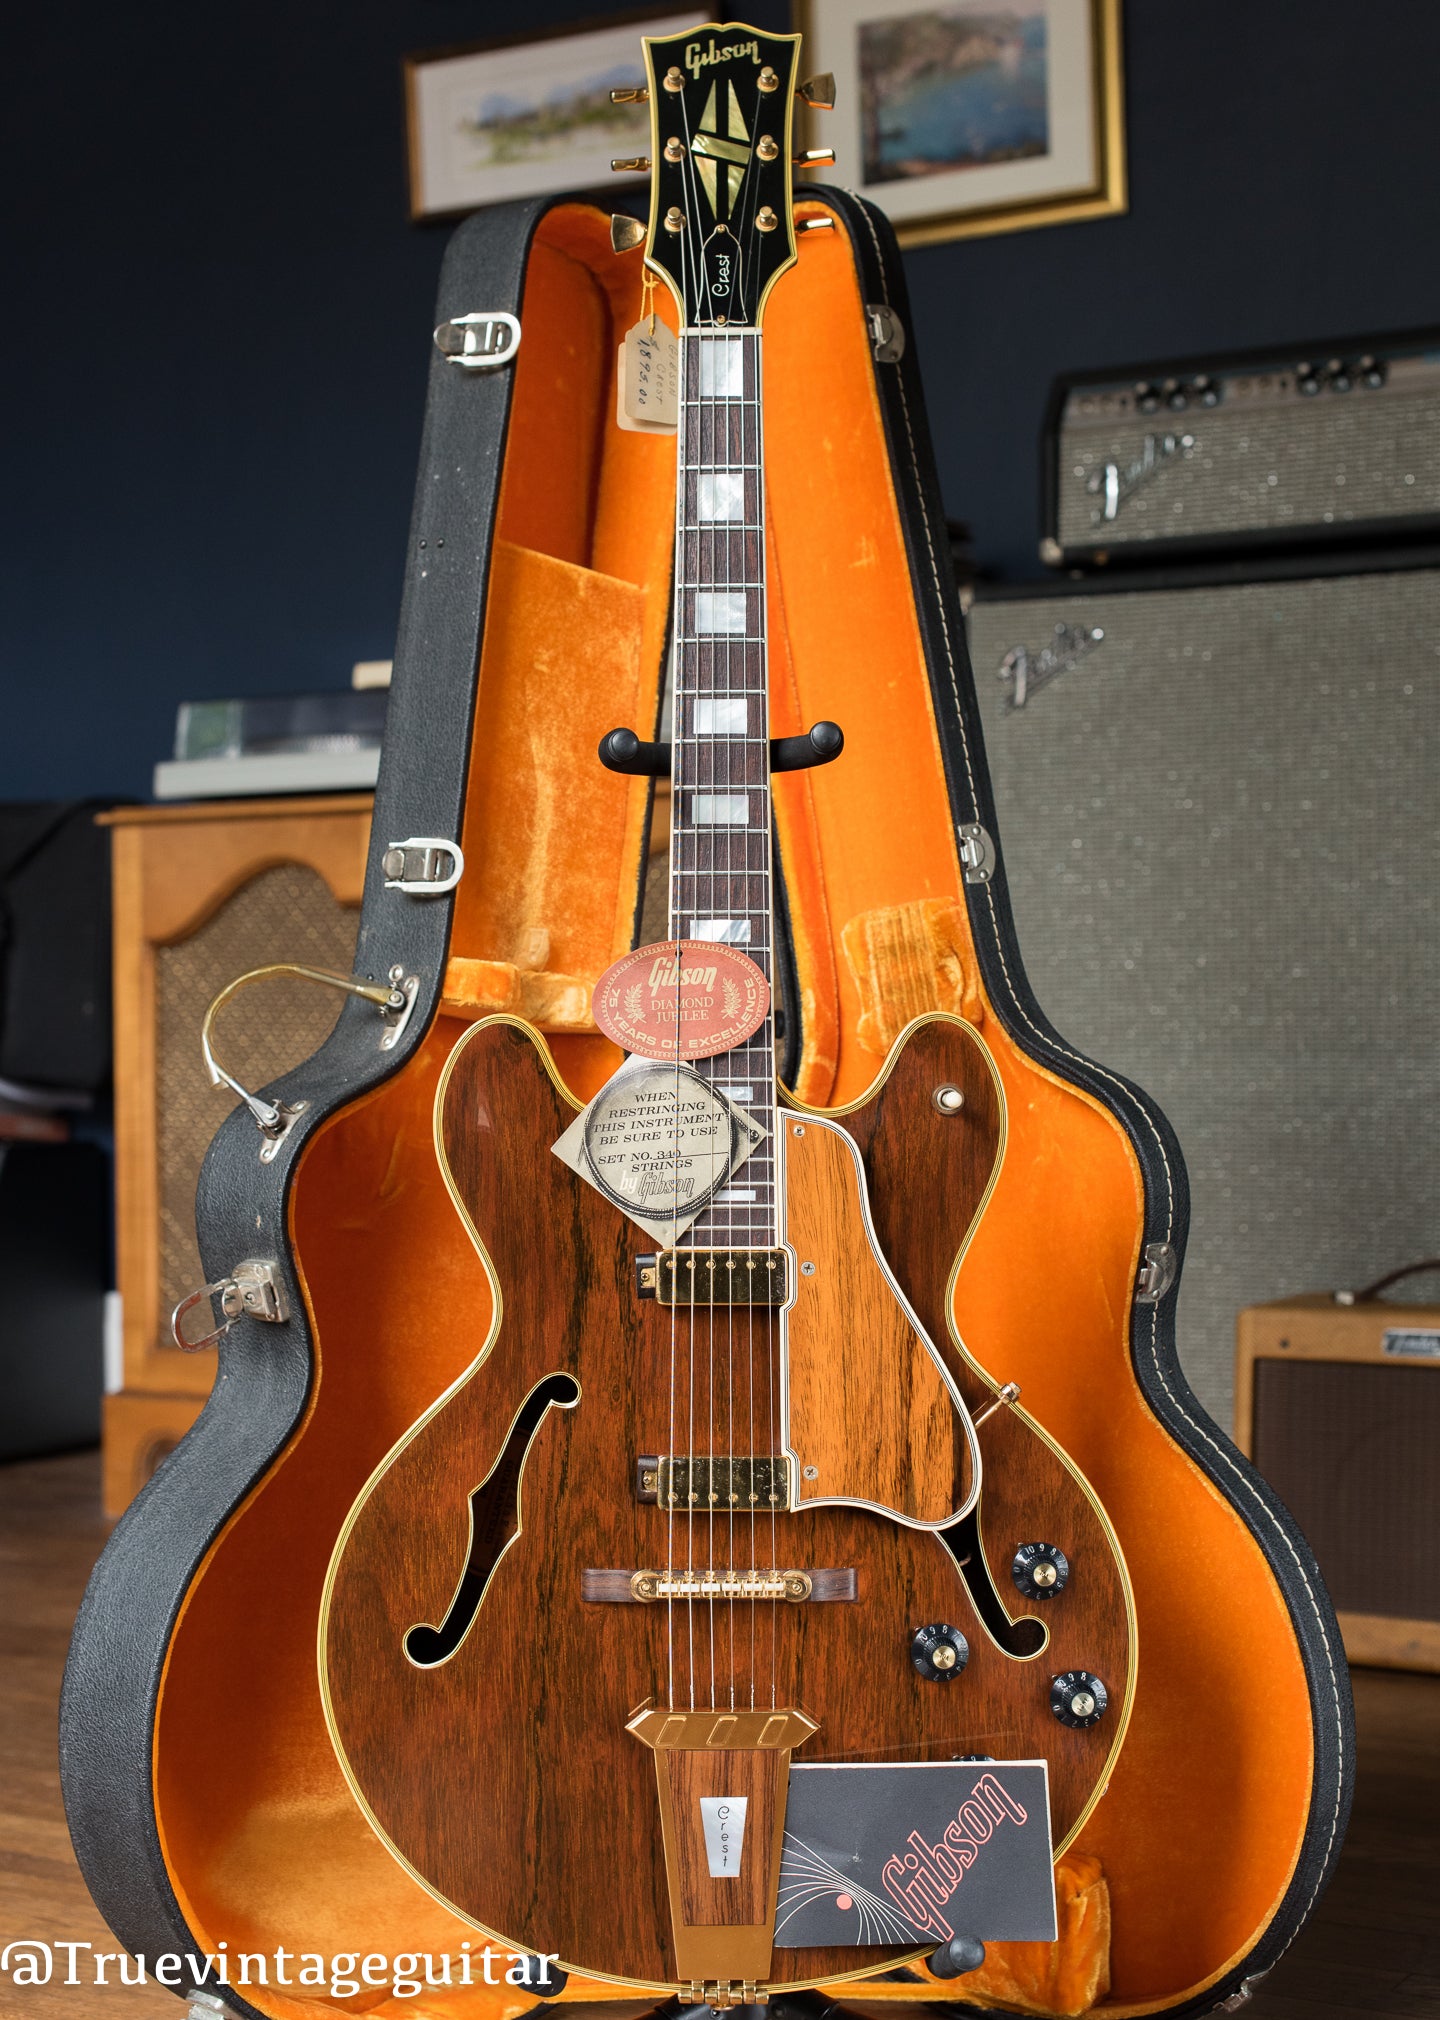 Vintage Gibson Crest guitar